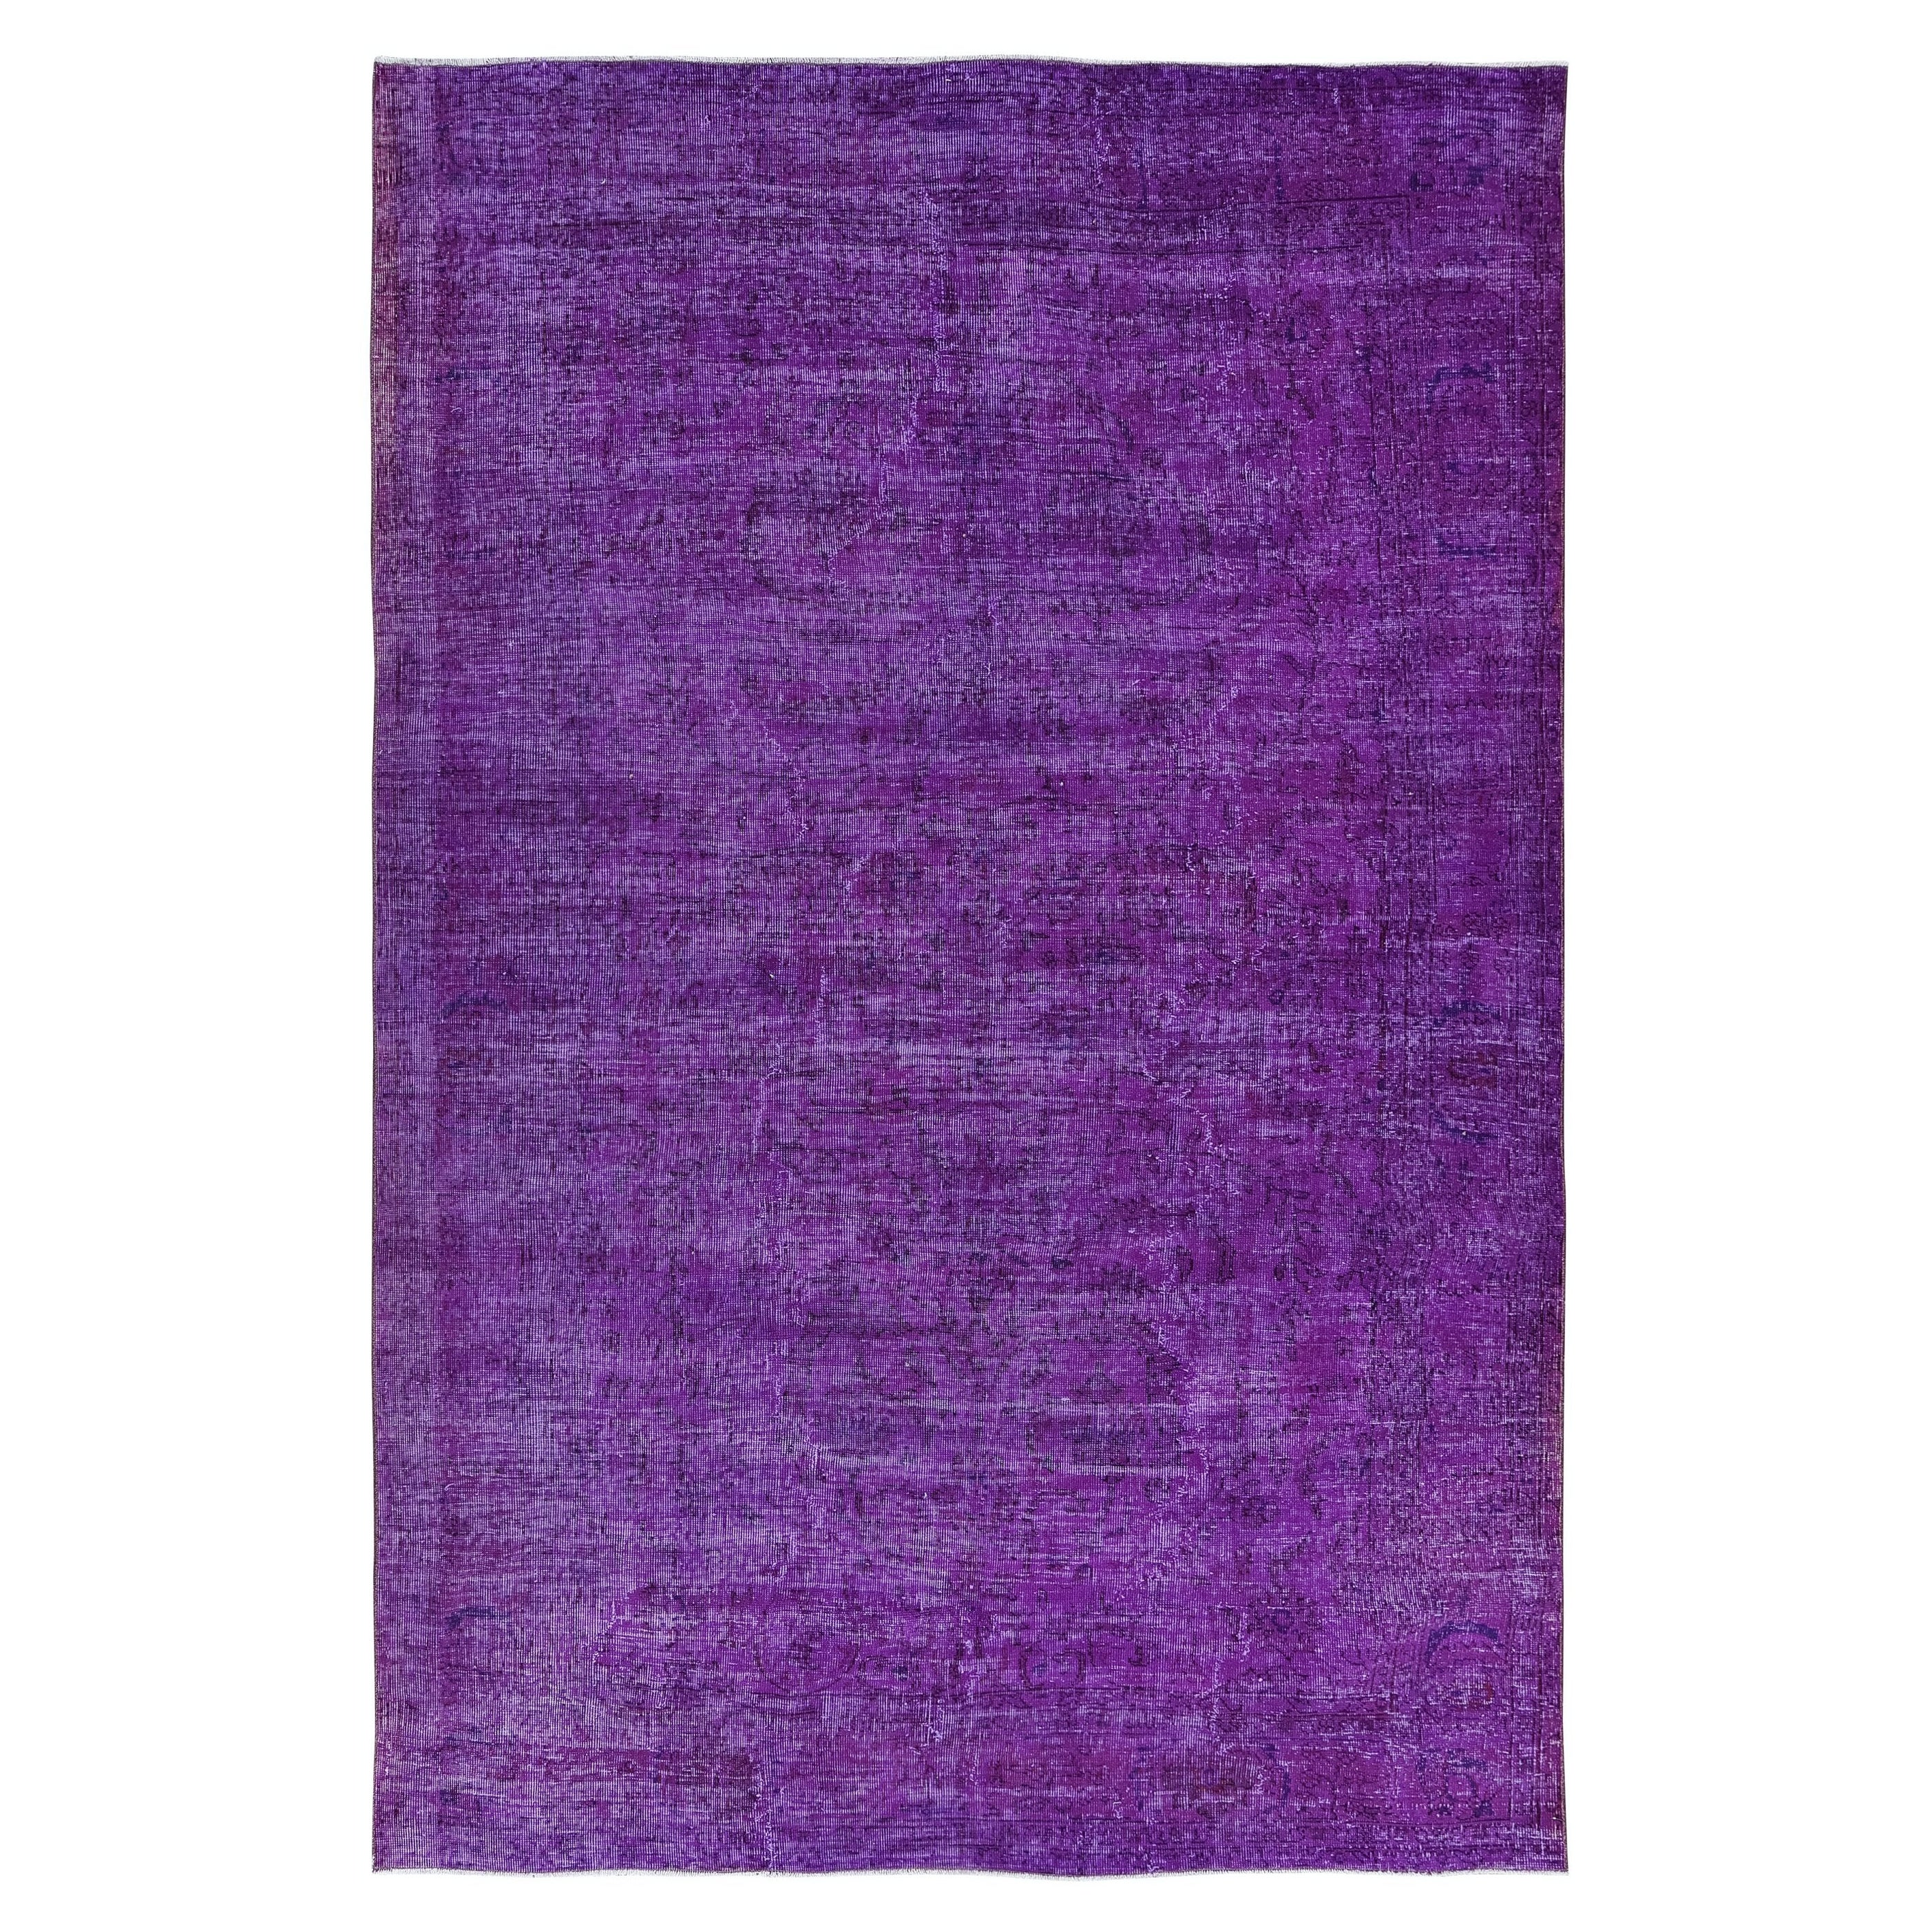 7x10.2 Ft Unique Handknotted Modern Large Rug in Purple. Turkish Bohem Carpet For Sale